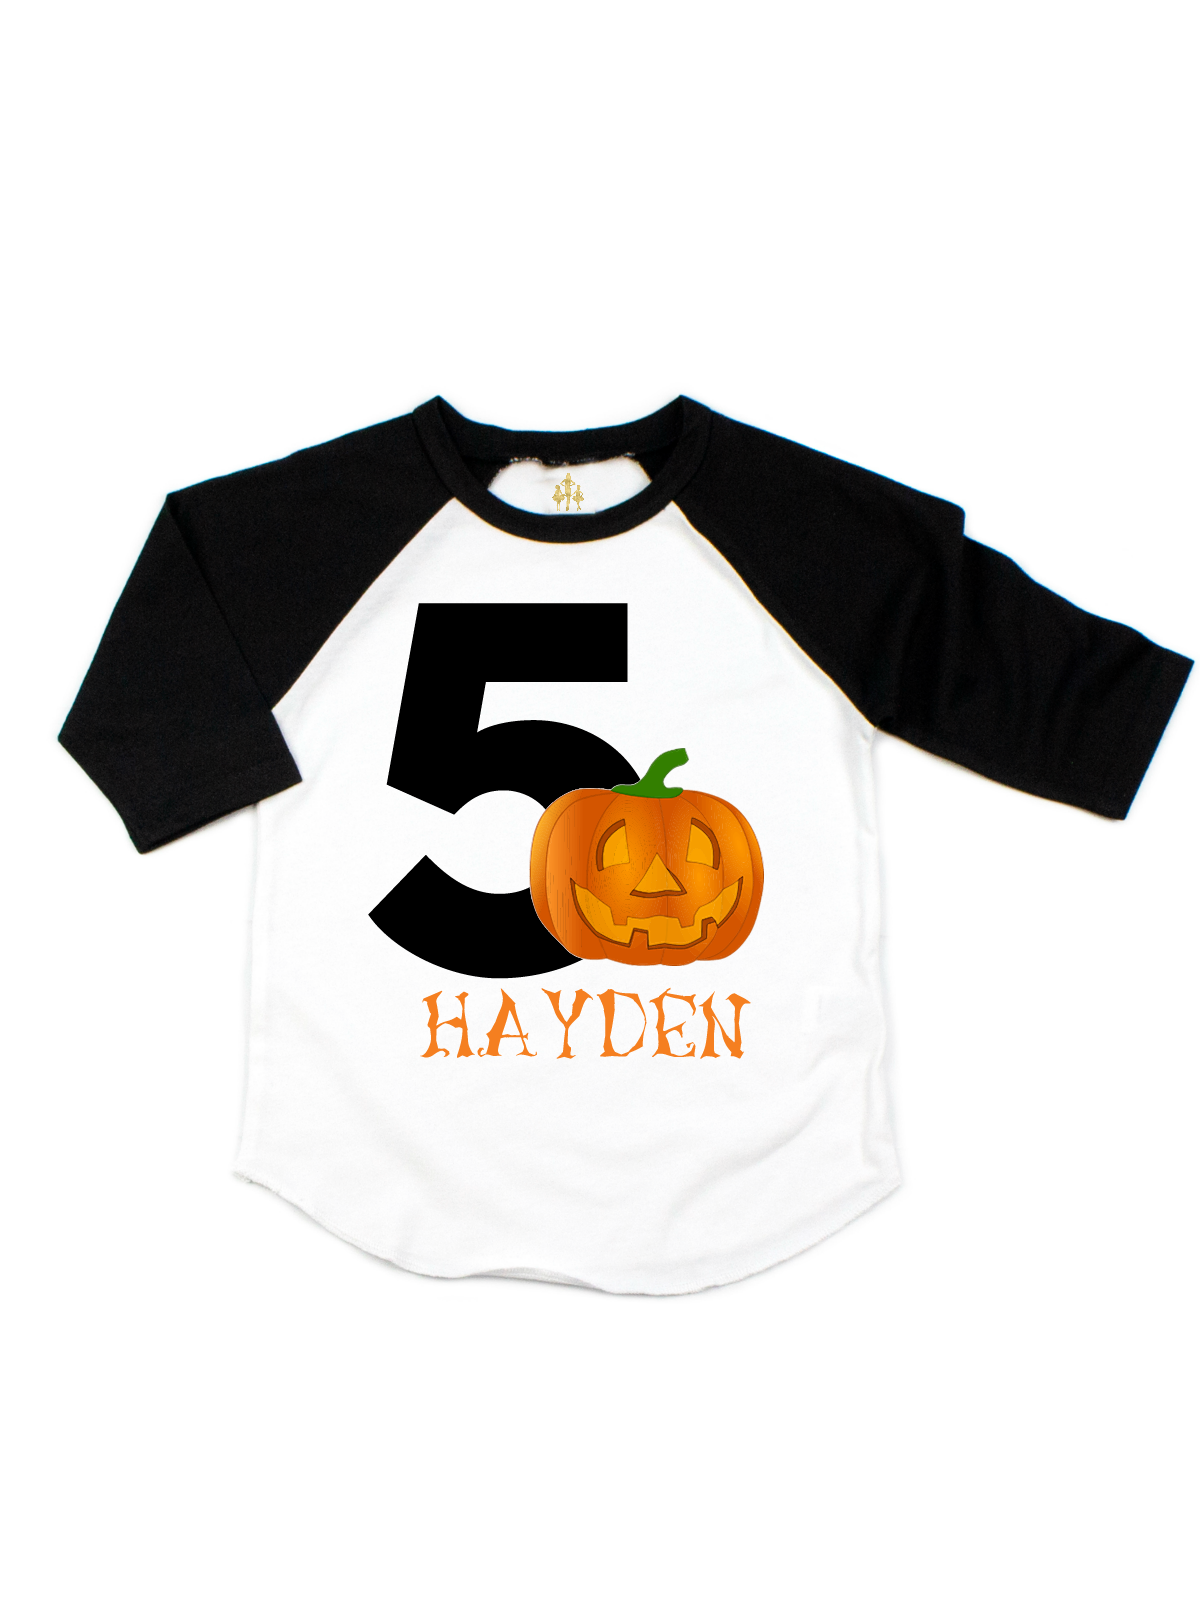 Jack-o-lantern Birthday Raglan Shirt - Personalized